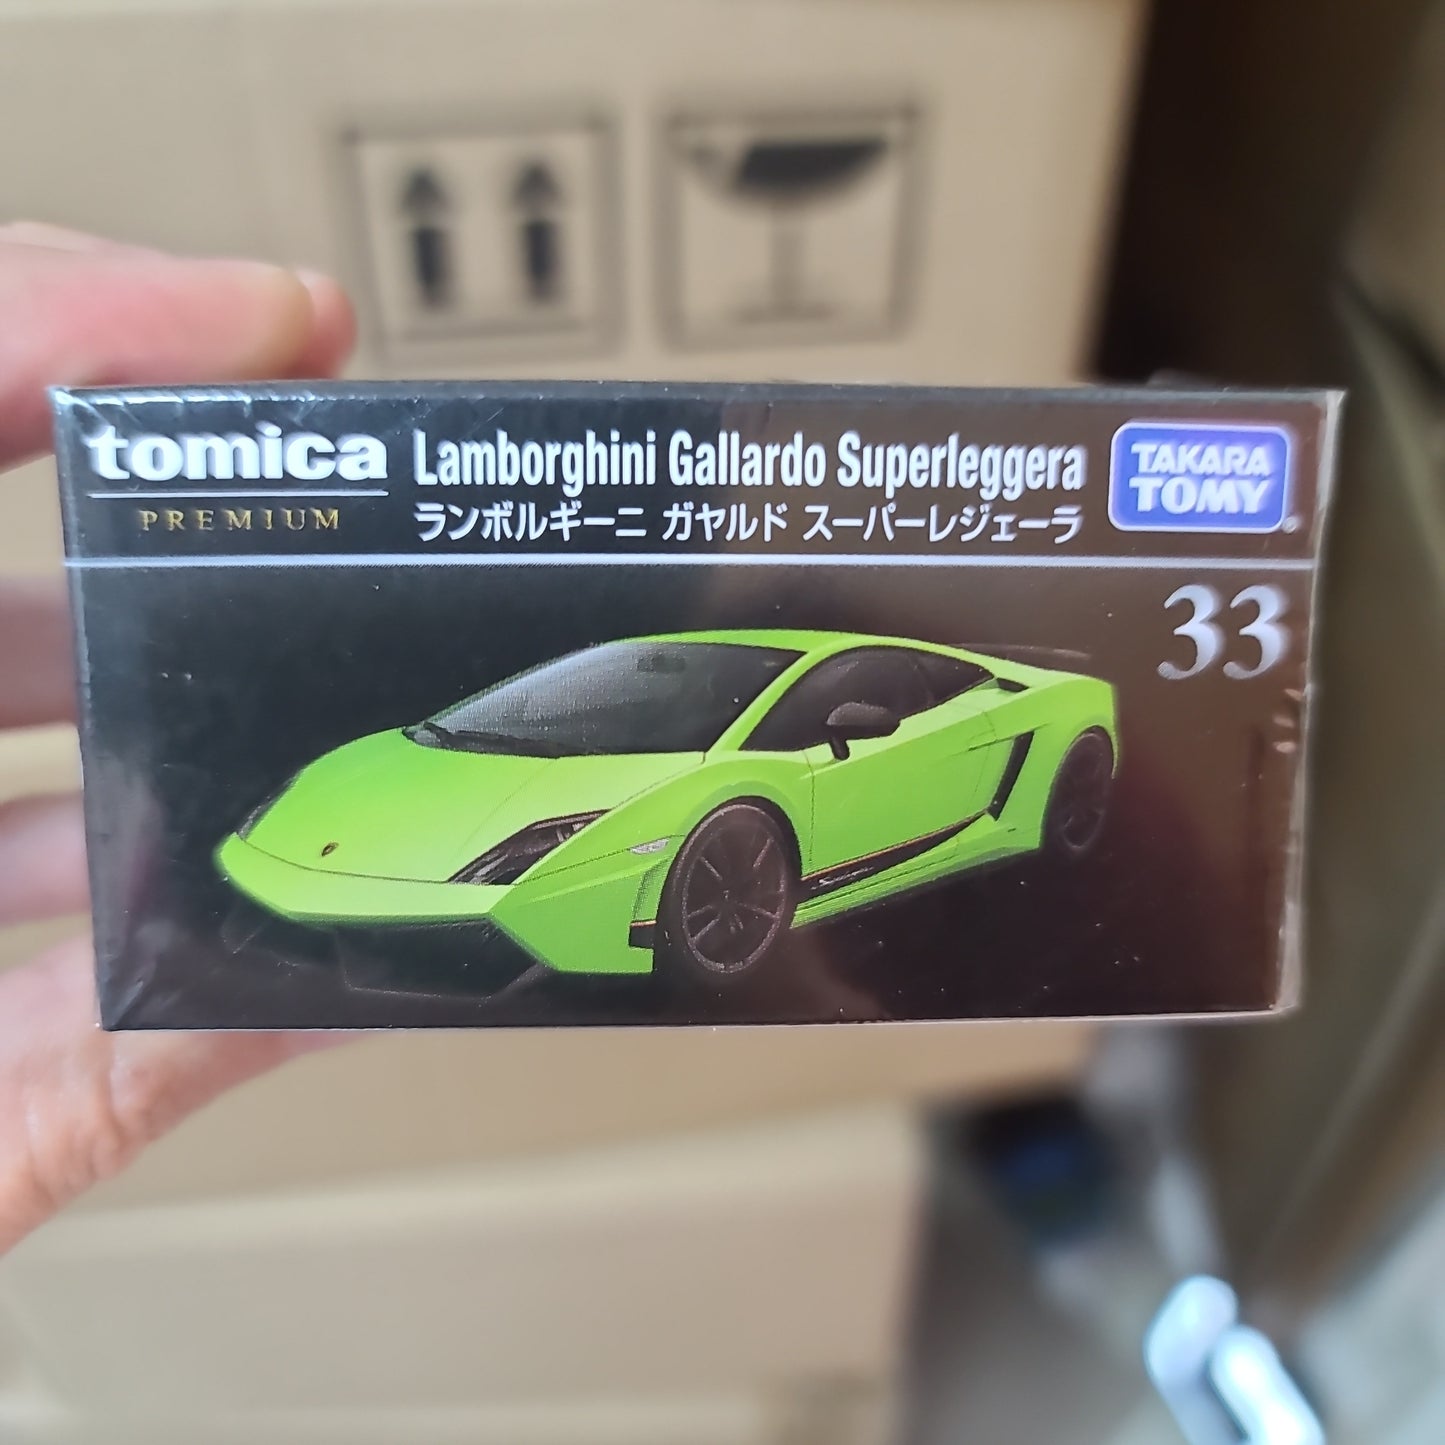 Tomica Premium No.33 Gallardo Super Leggera set of two